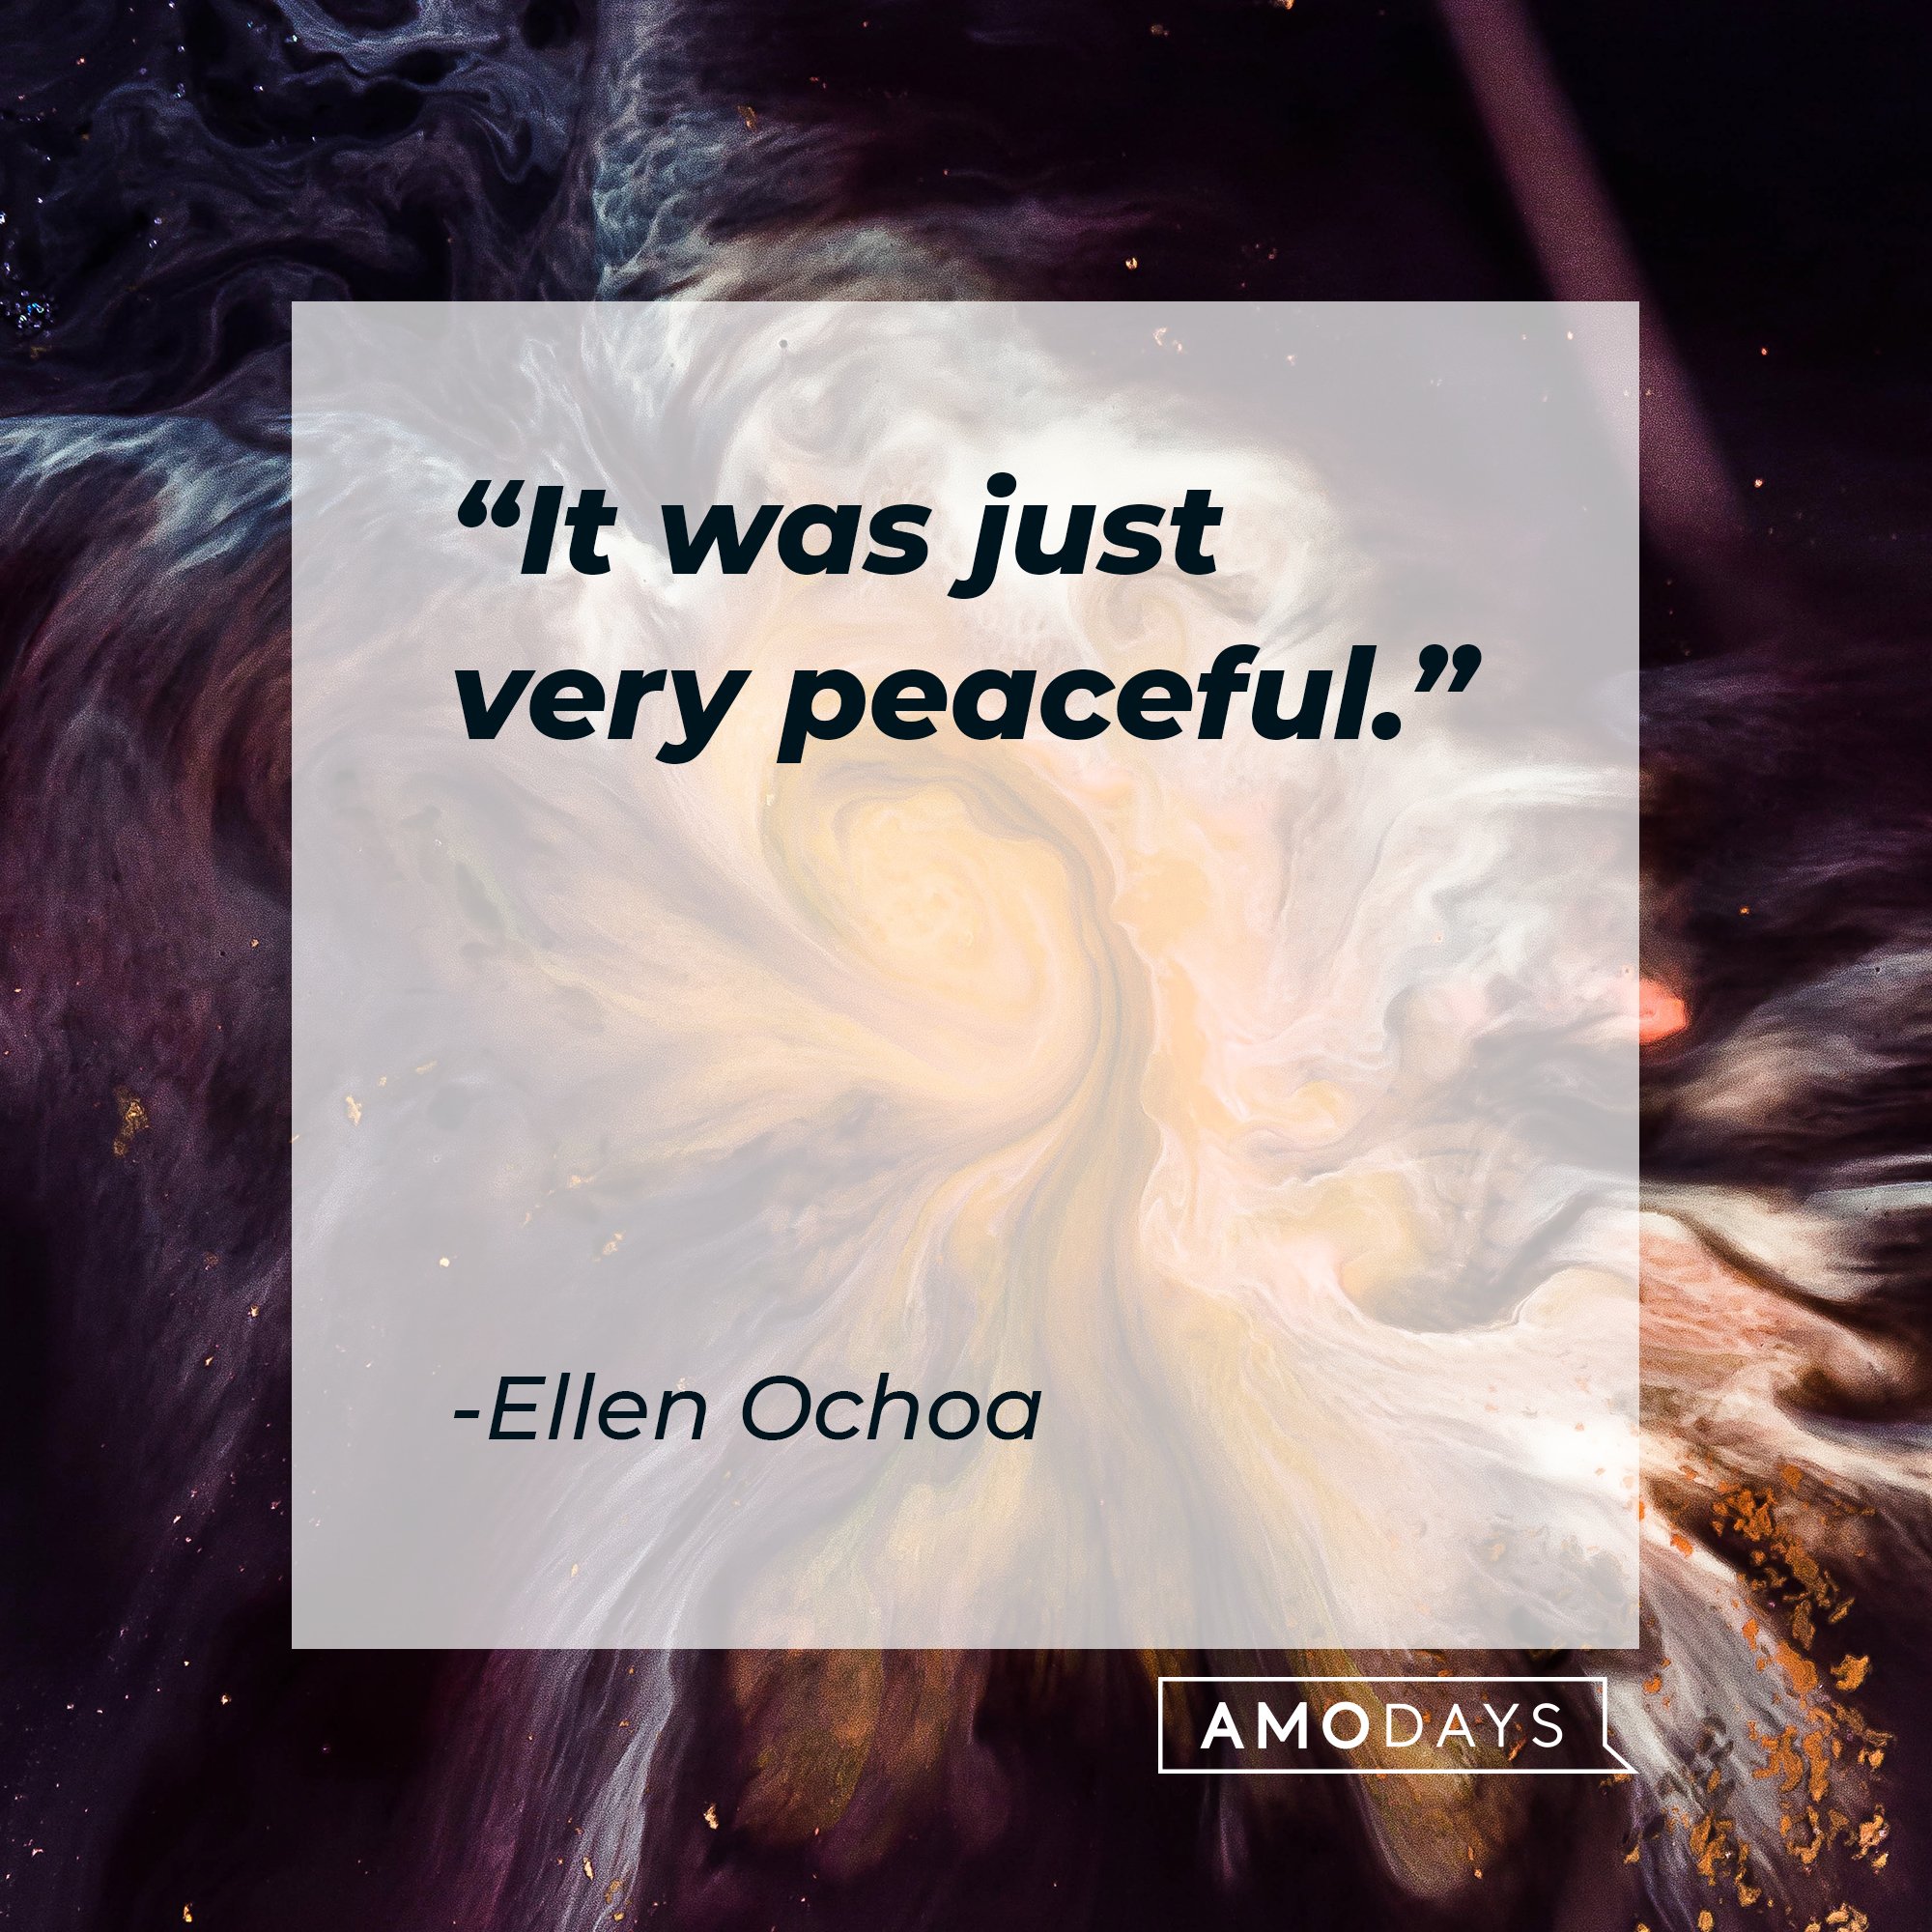  Ellen Ochoa's quote: "It was just very peaceful." | Image: AmoDays